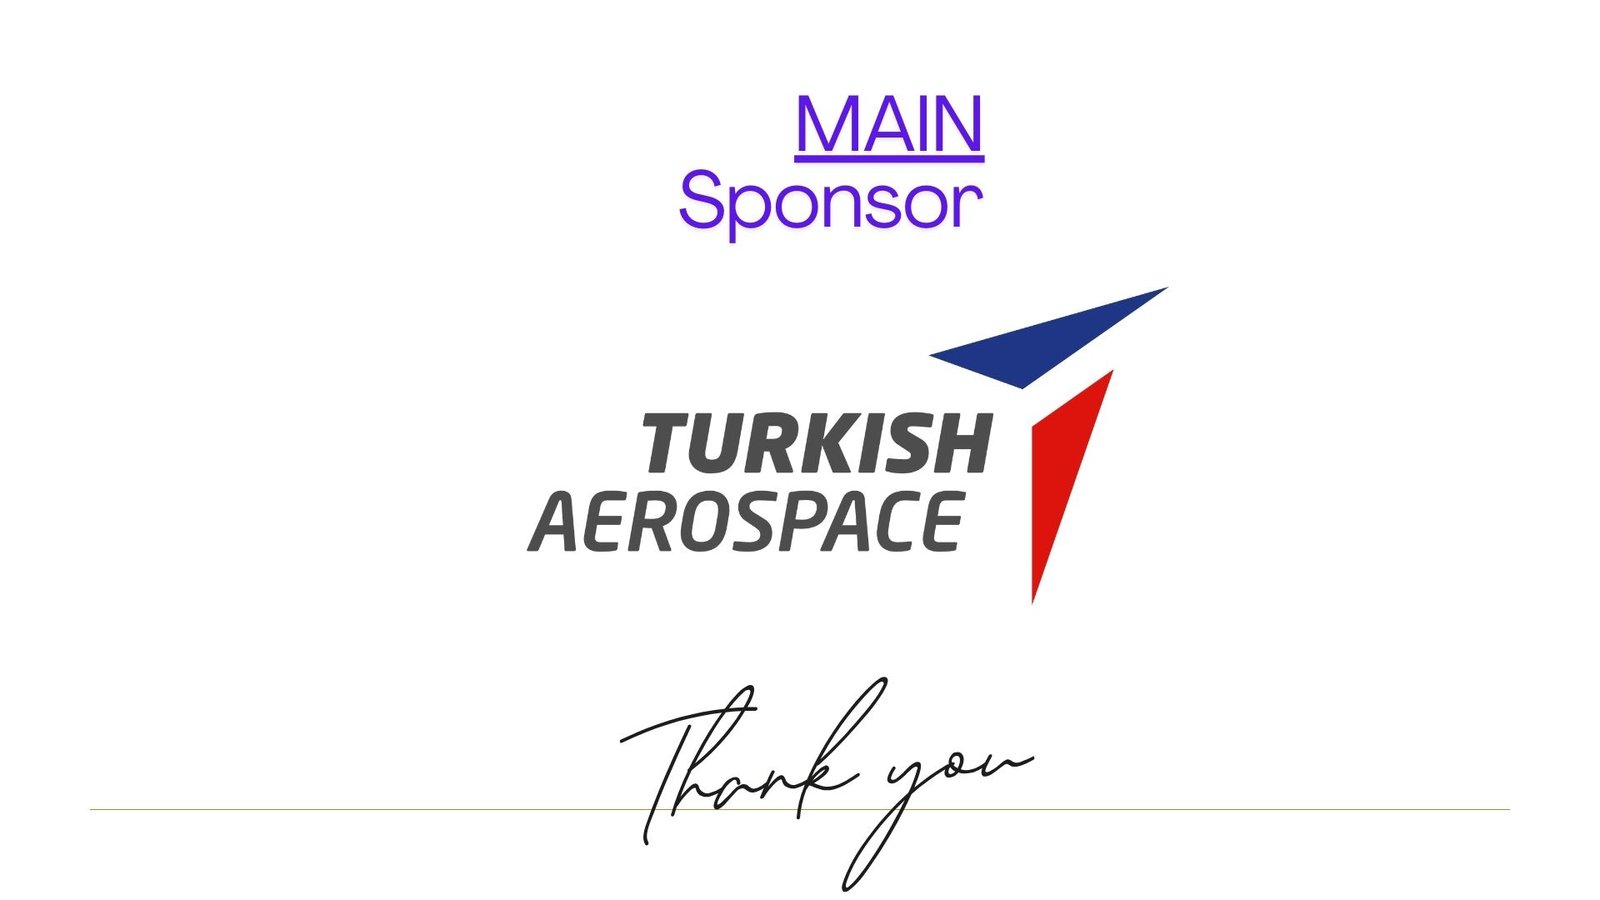 main sponsor_turkish aerospace